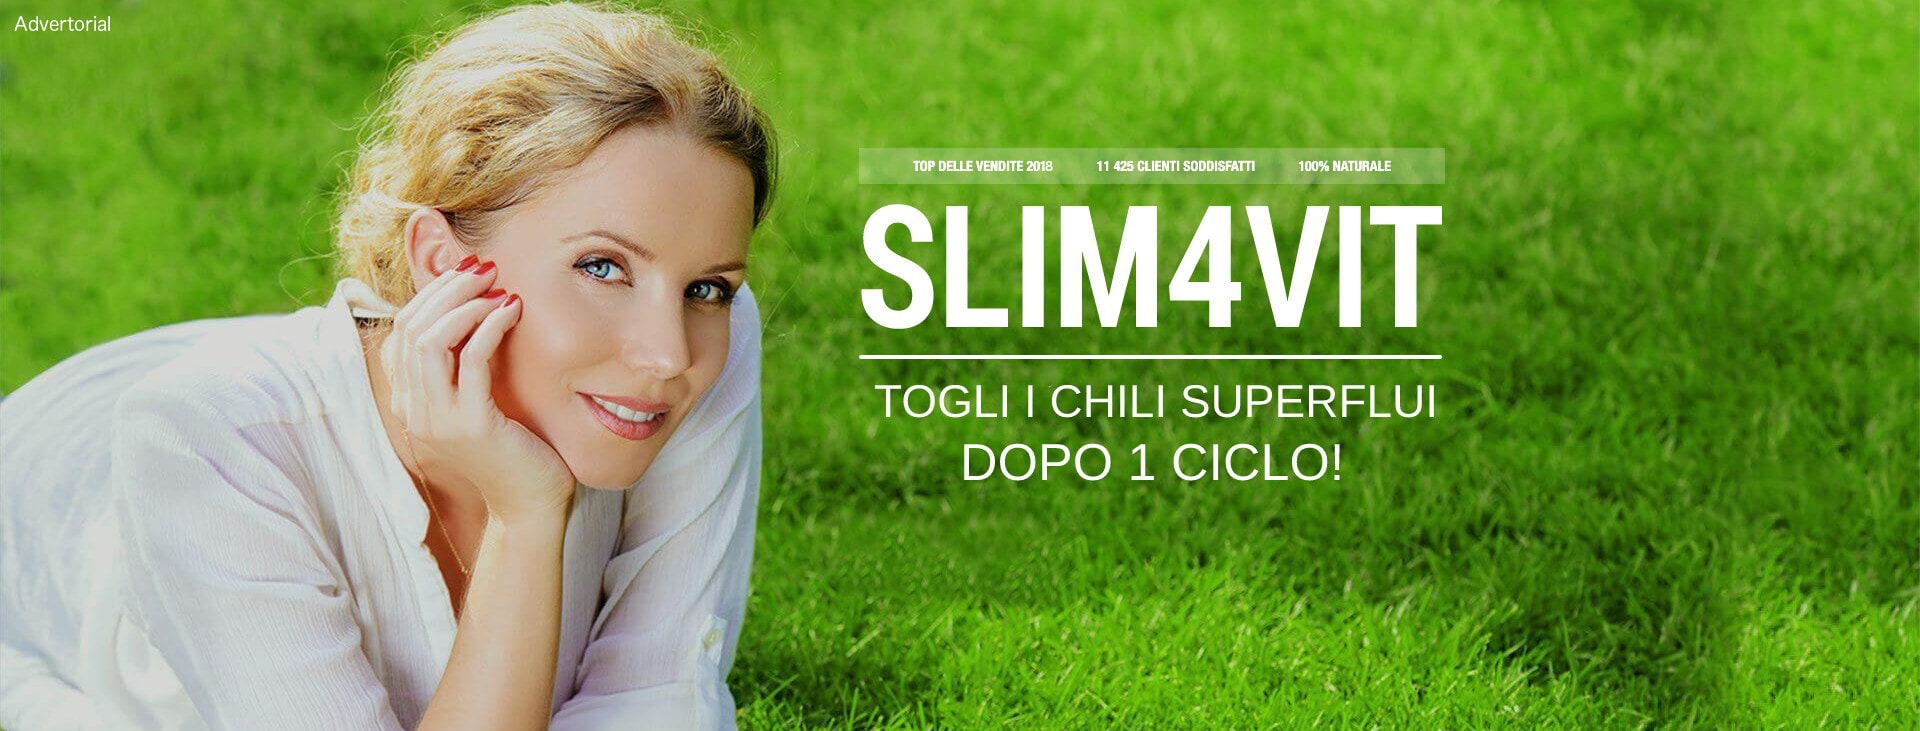 slim4vit dimagrire integratore naturale vitamine